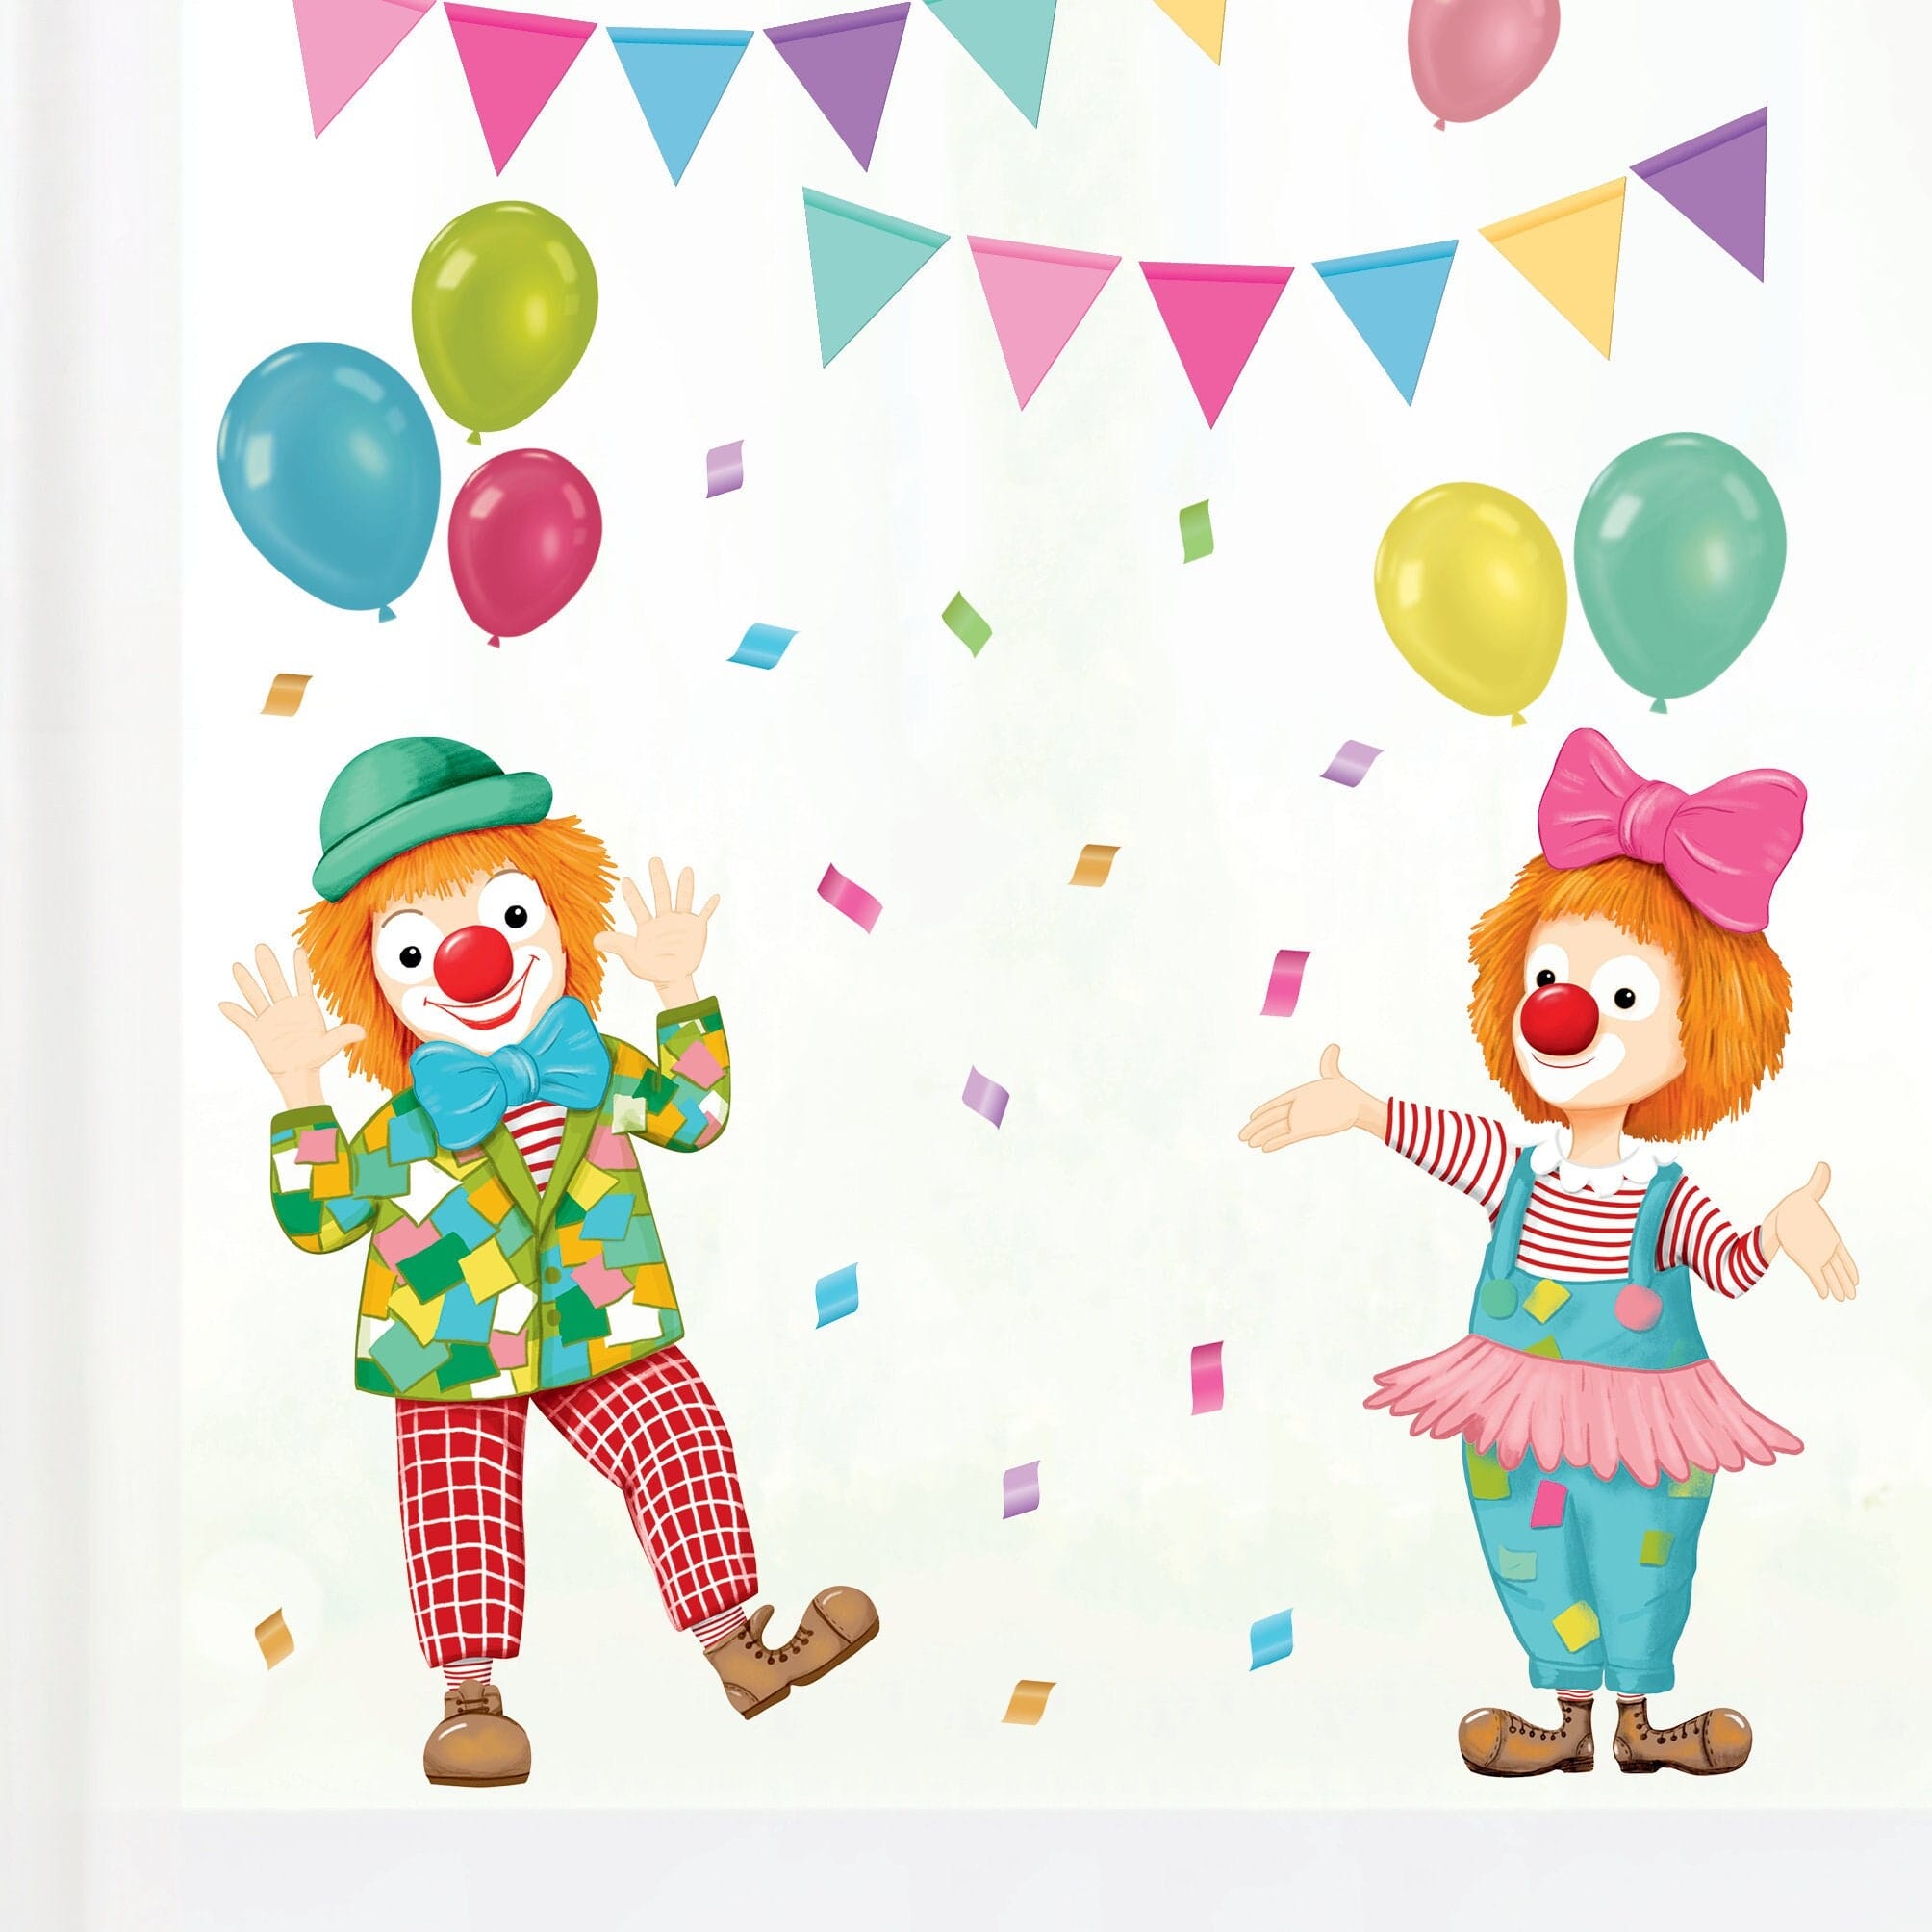 Fensterbild Karneval Clowns Girlande Luftballons wiederverwendbar Frühling bunte Dreiecke Fasching farbig